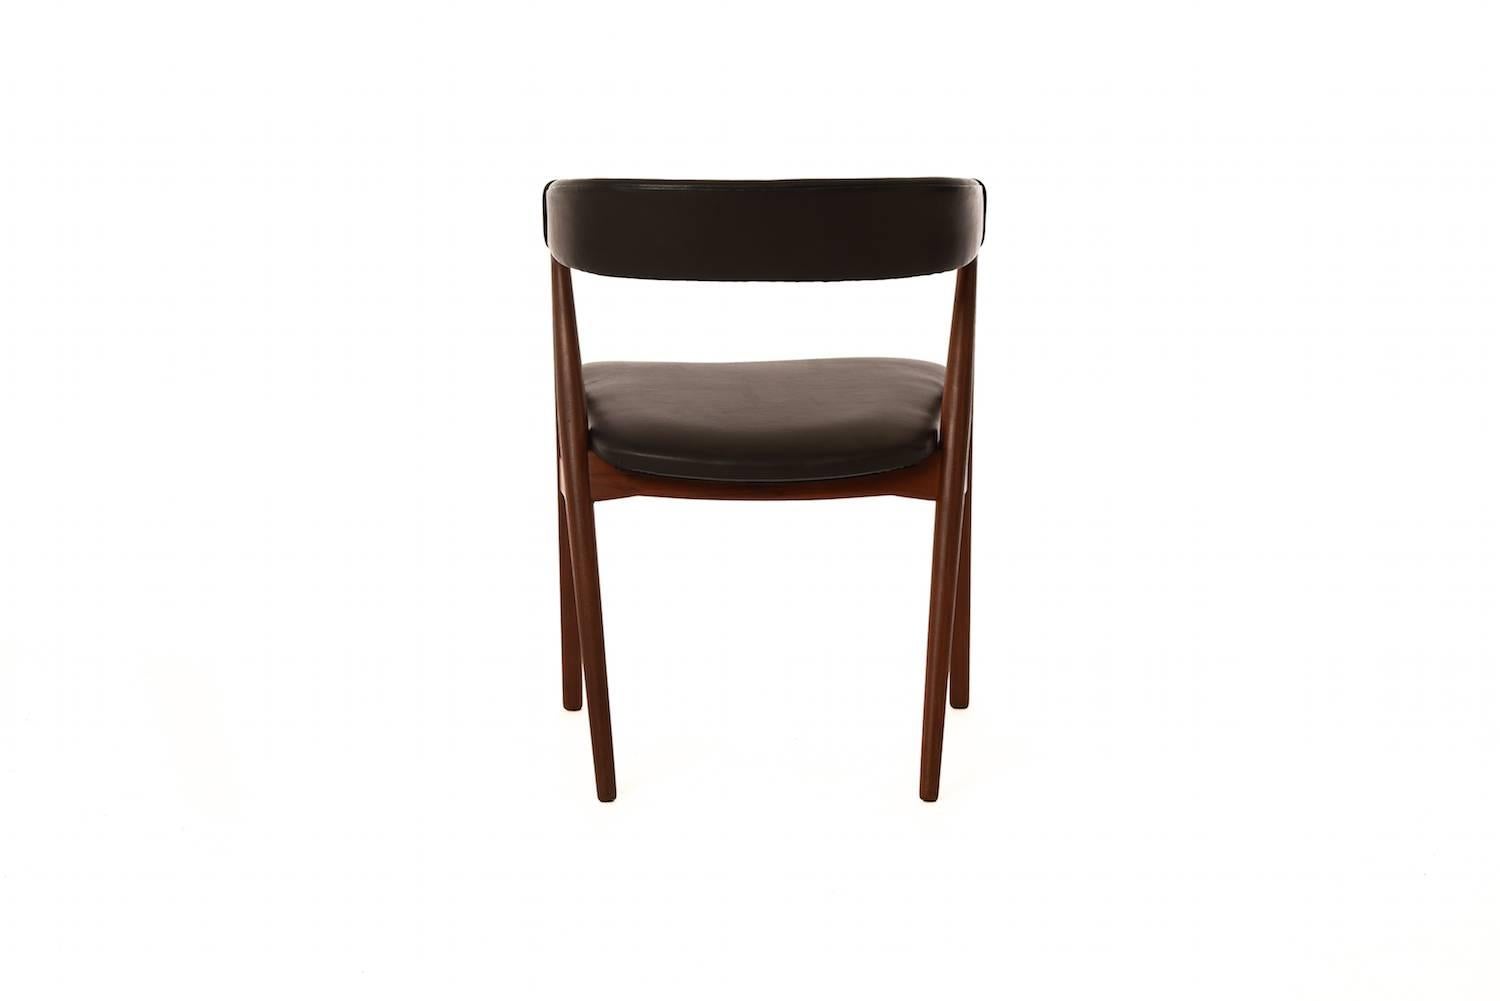 20th Century Danish Modern Dining Chairs